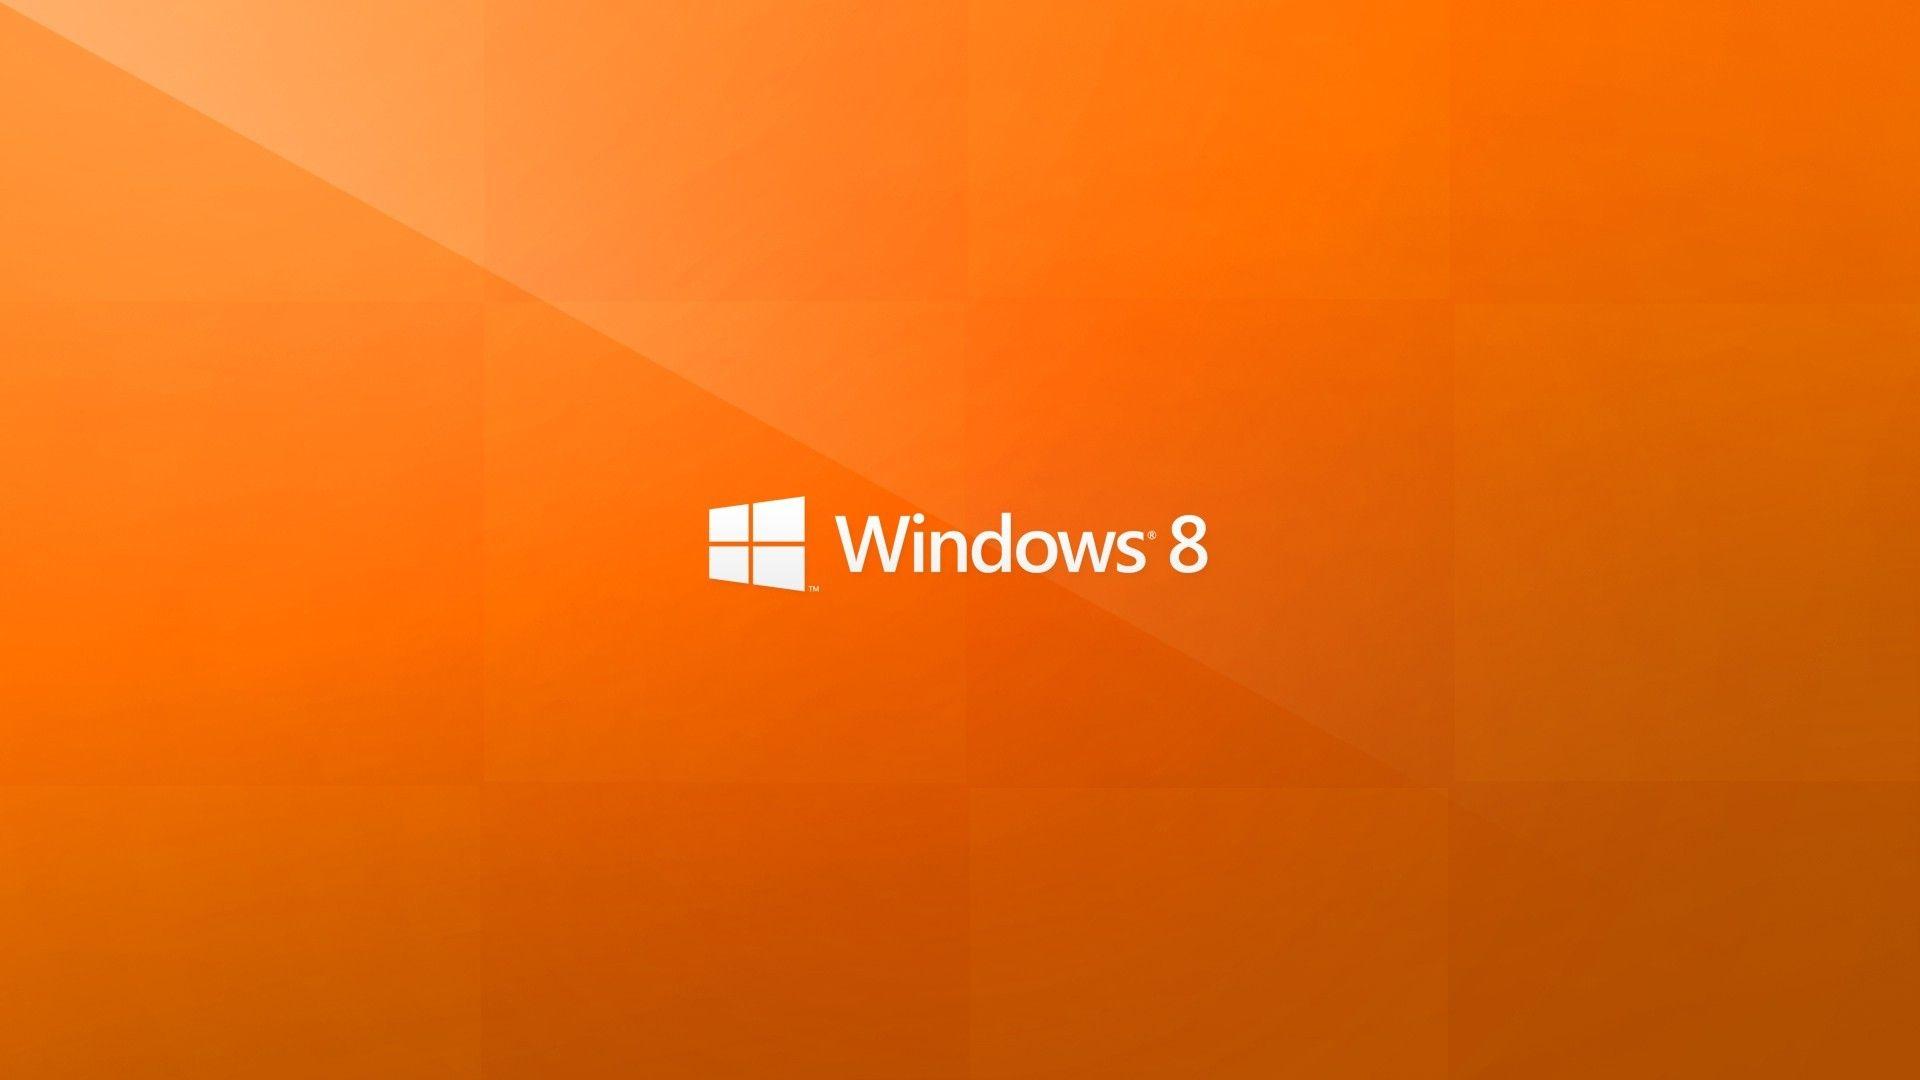 Orange operating systems windows 8 microsoft logo wallpaper